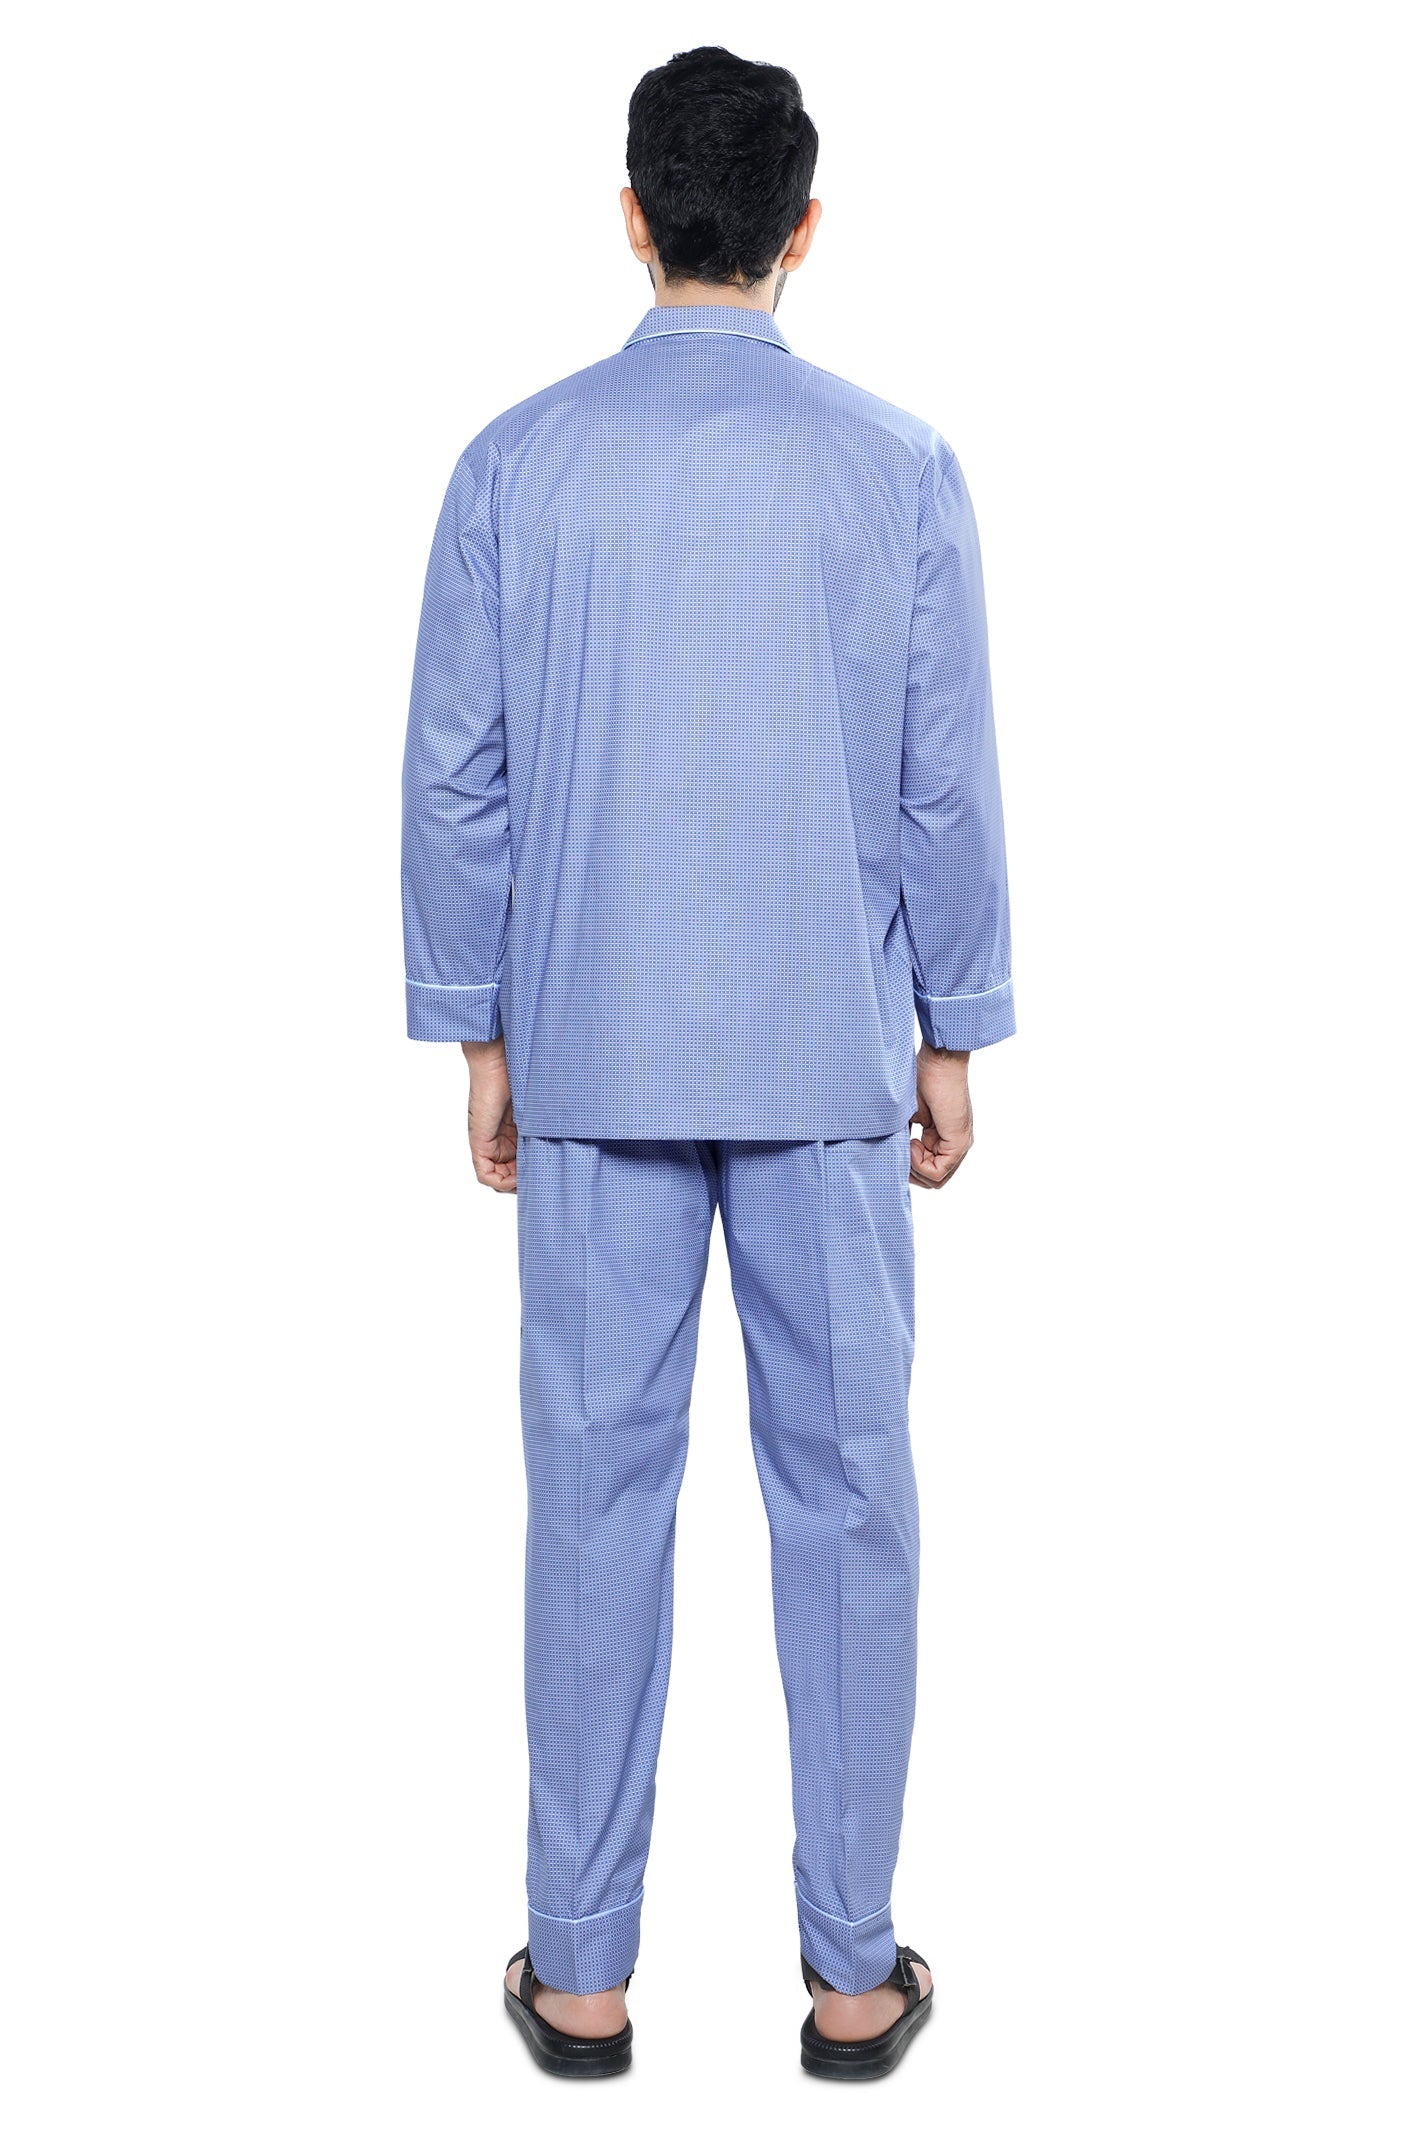 Diner's Night Suit for Men SKU: FNS007-BLUE - Diners